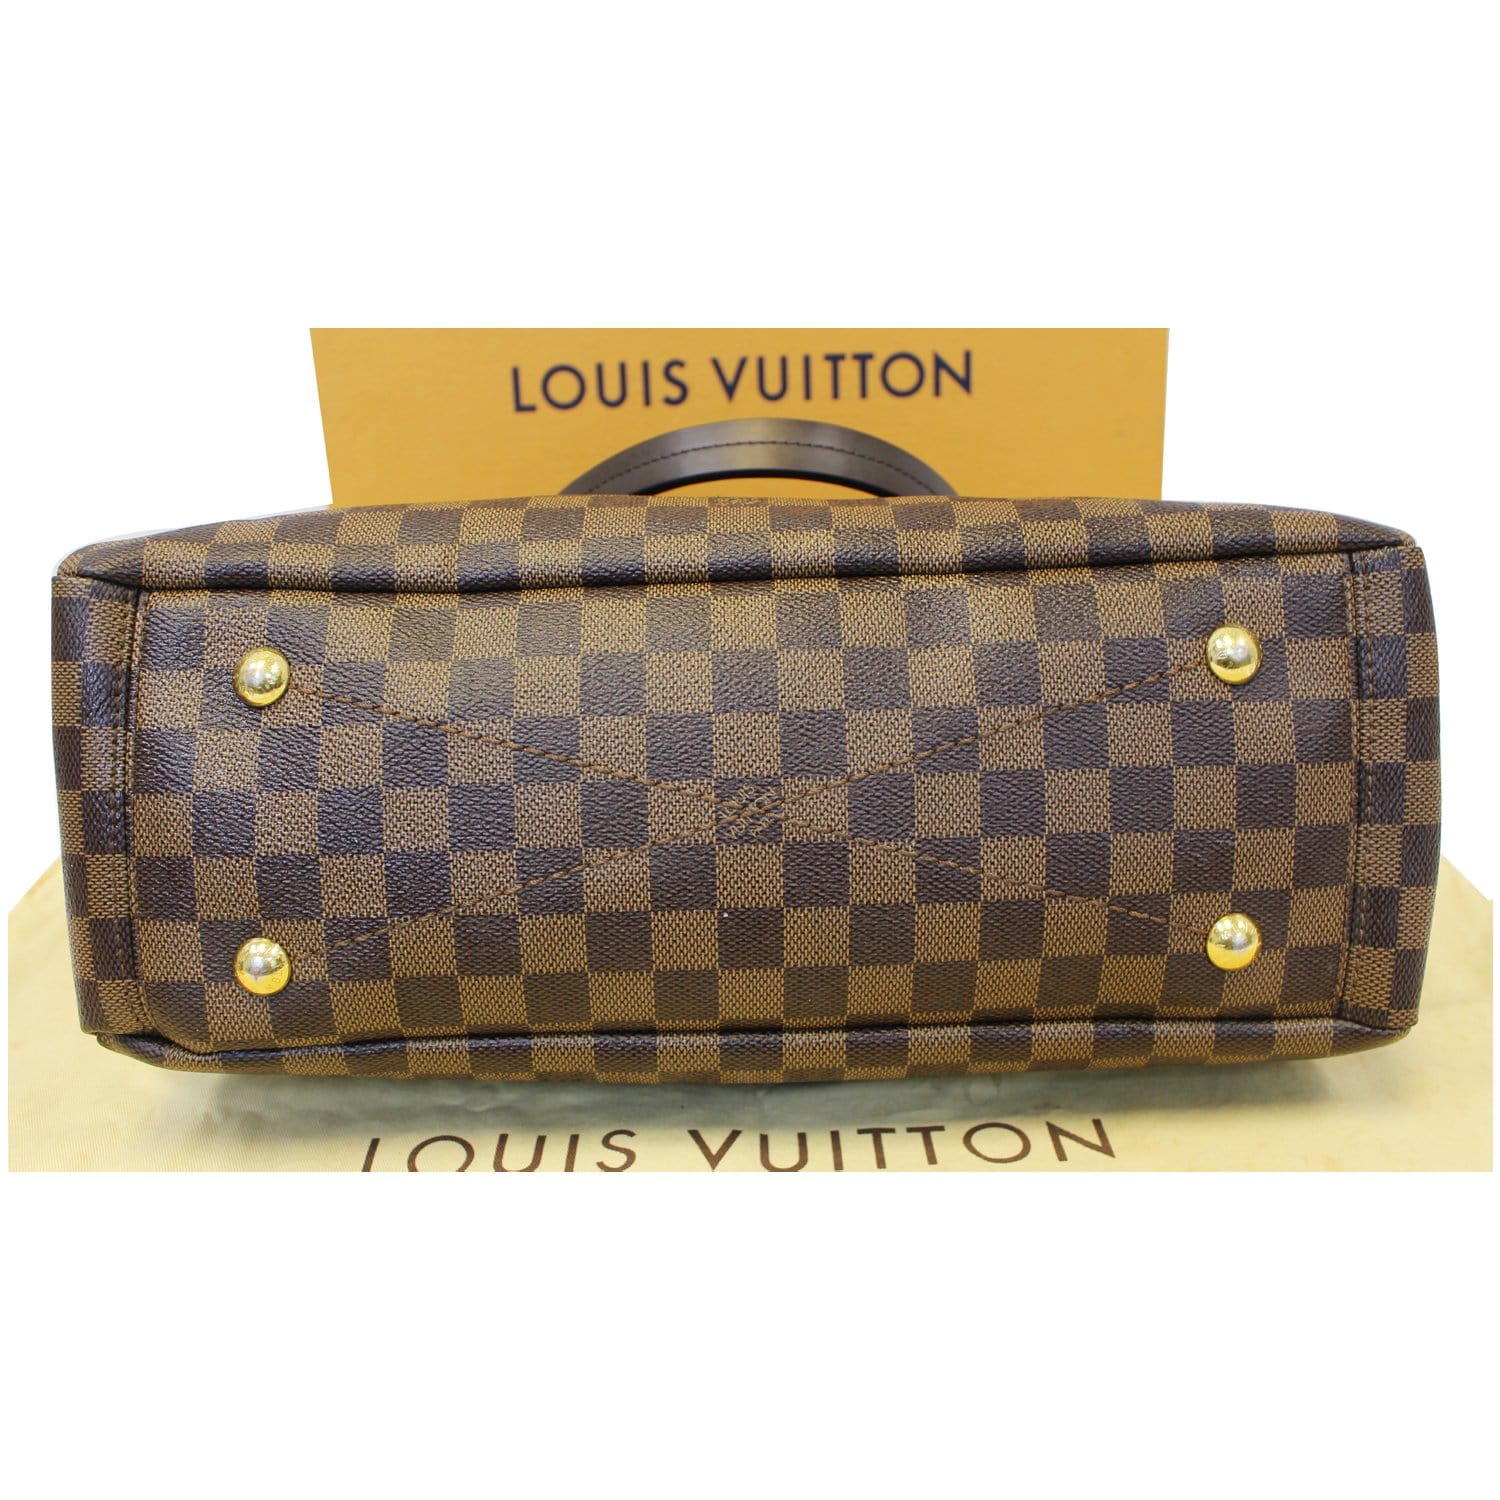 Louis Vuitton Lymington - THE PURSE AFFAIR